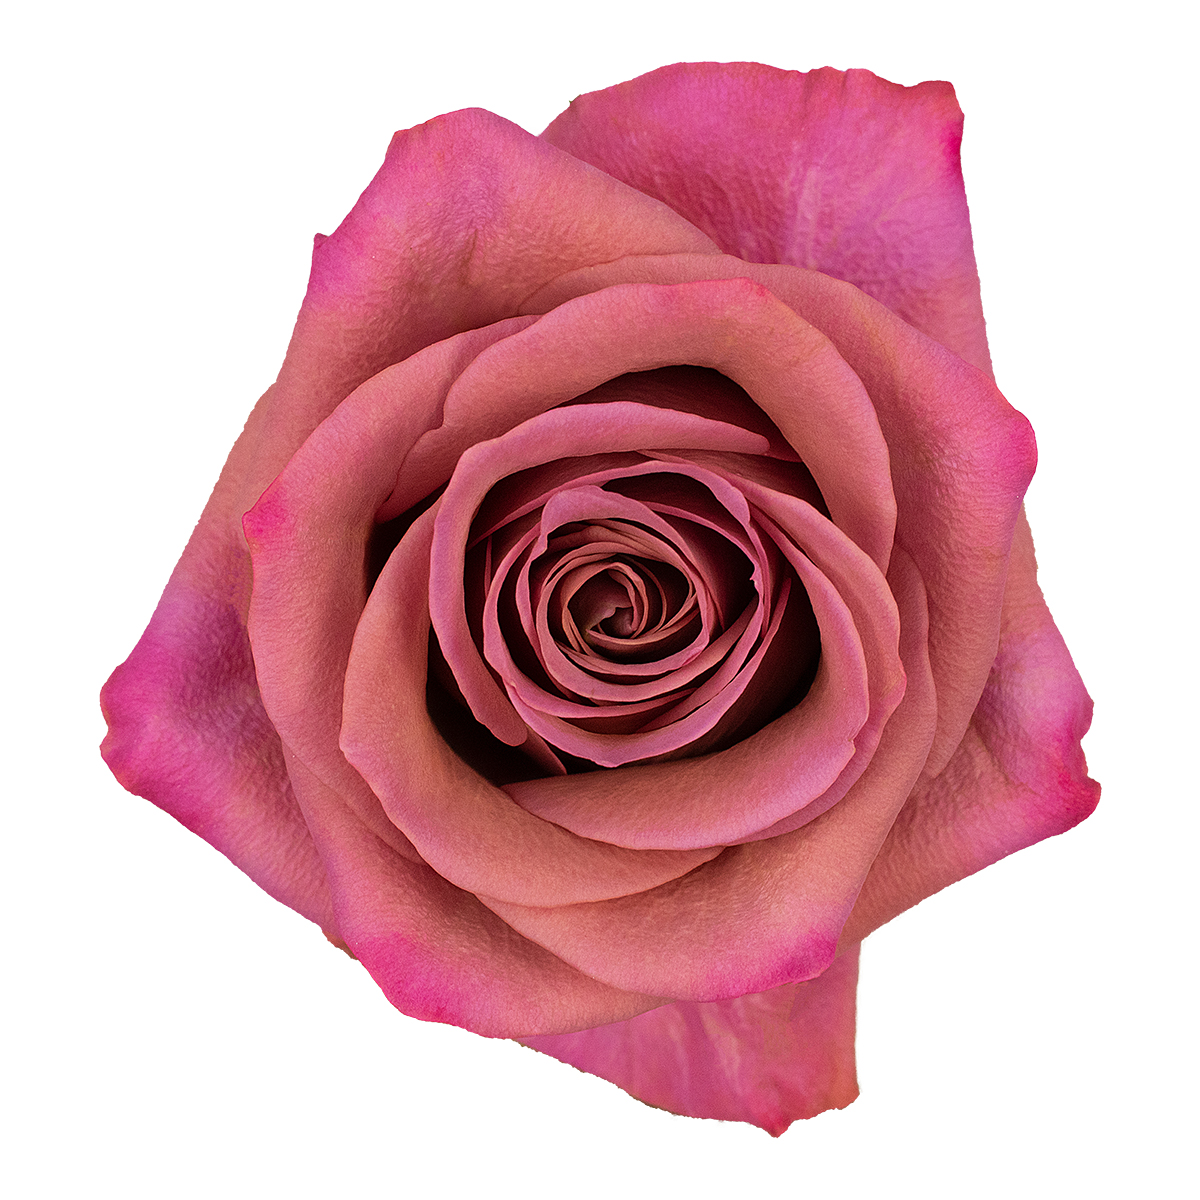 BARISTA rose - Florist Rose Paradise! - Decofresh TOTF2020 on Thursd